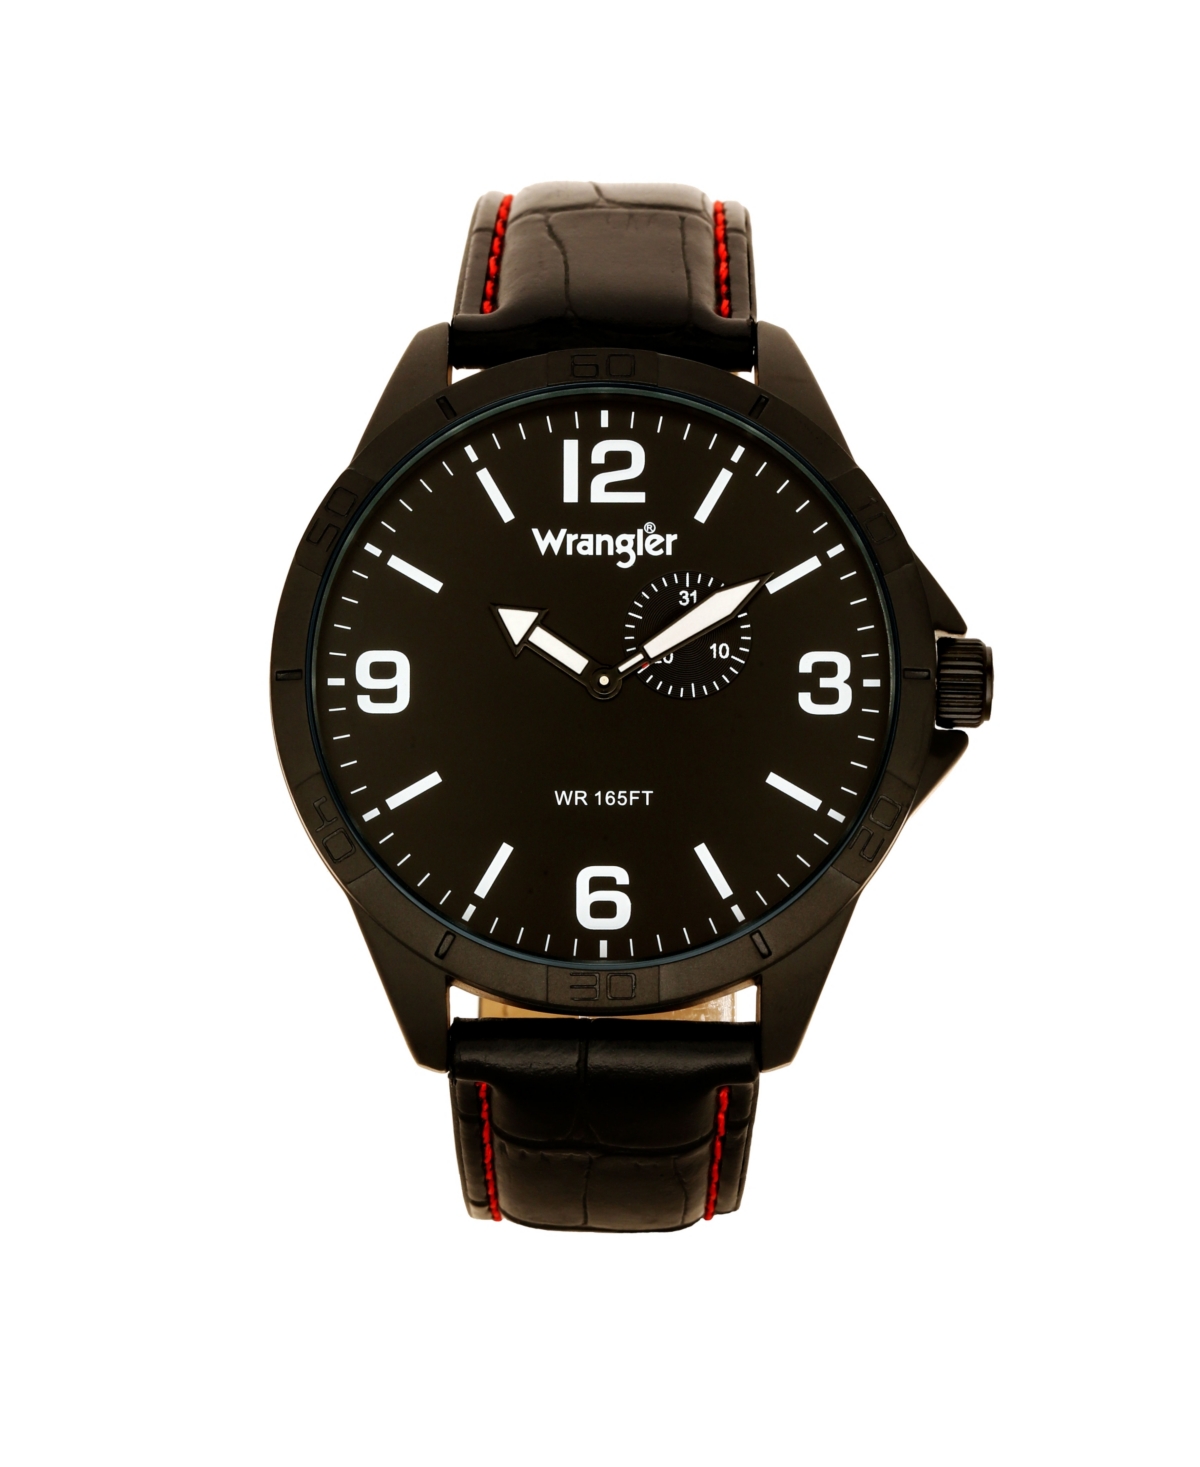 Men's Watch, 48MM Ip Titanium Case with Titanium Dial, Second Hand Subdual, Black Strap with Red Stitching - Black